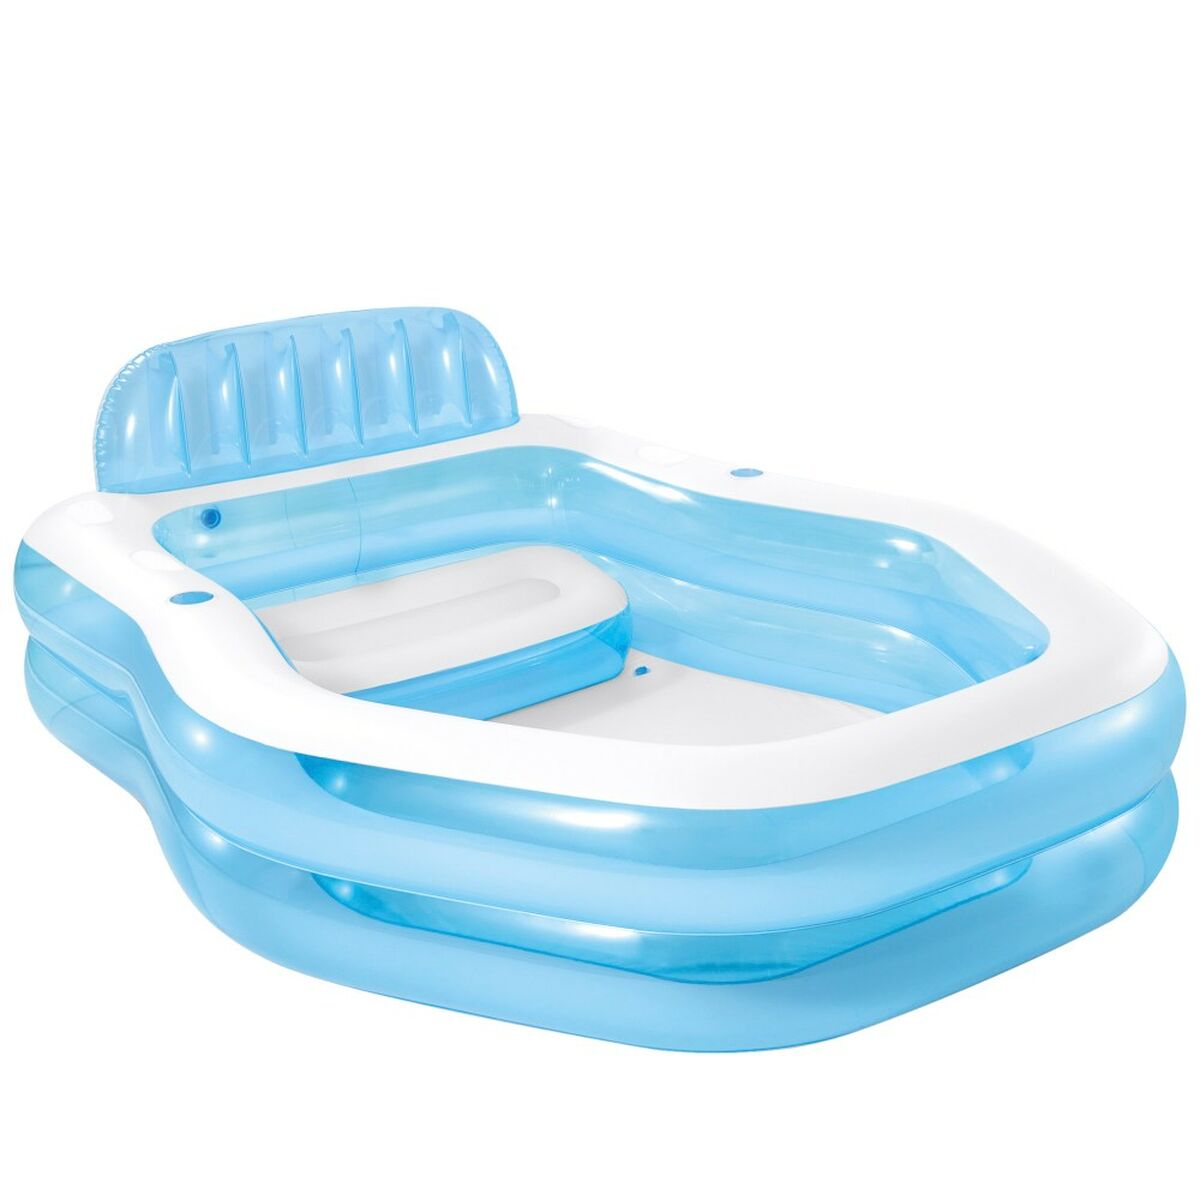 Inflatable pool Intex Blue 530 l 229 x 135 x 191 cm (2 Units)